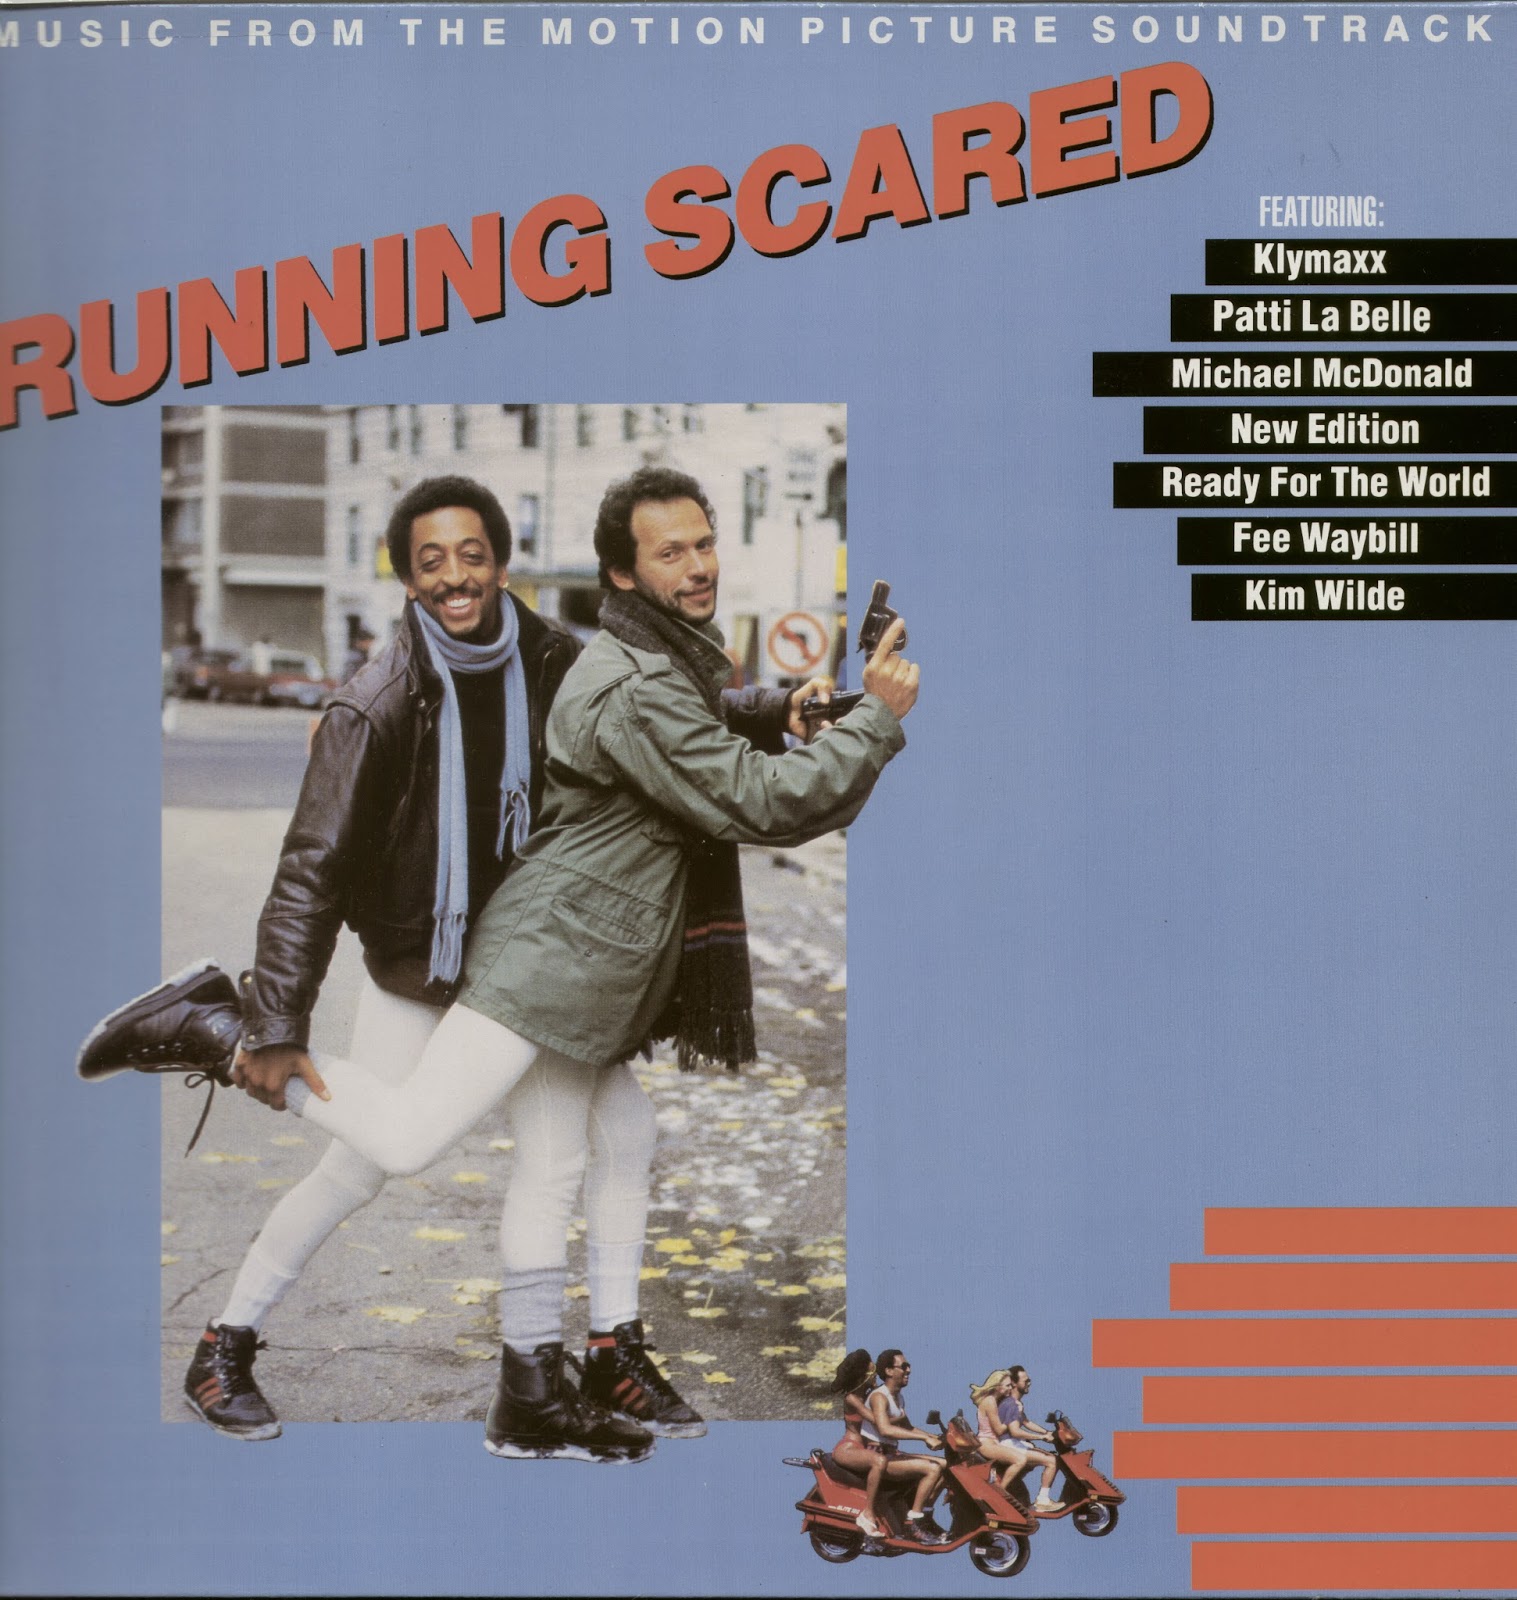 Беги без оглядки / Running scared (1986) обложки. Klymaxx 1986 Klymaxx. Саундтреки купить. Runner soundtrack